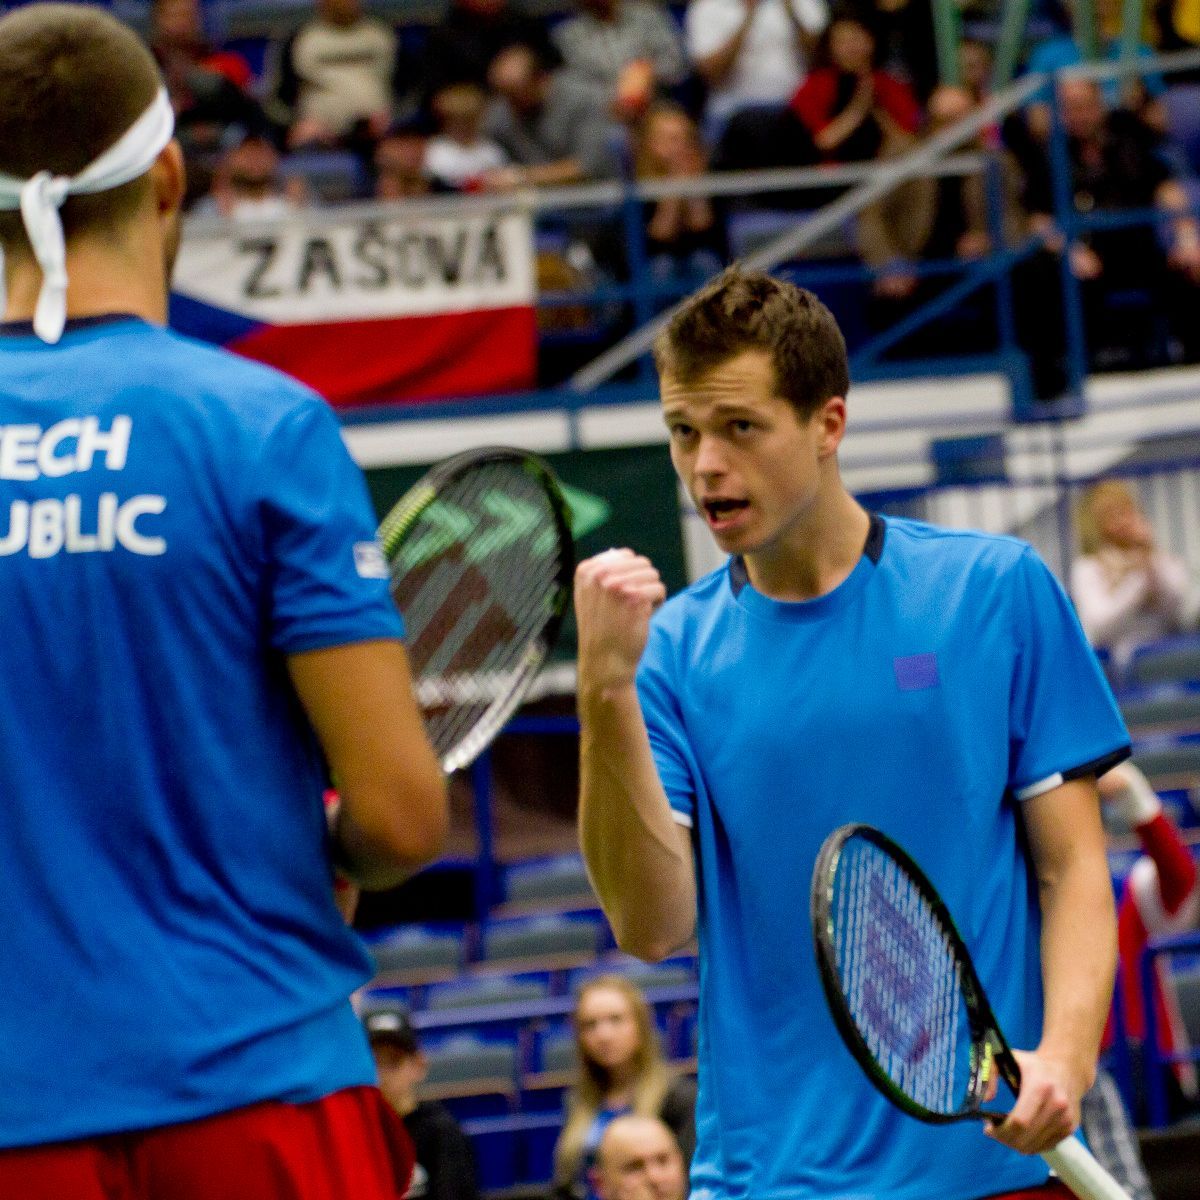 Davis Cup, ČR-Austrálie: Jiří Veselý a Adam Pavlásek